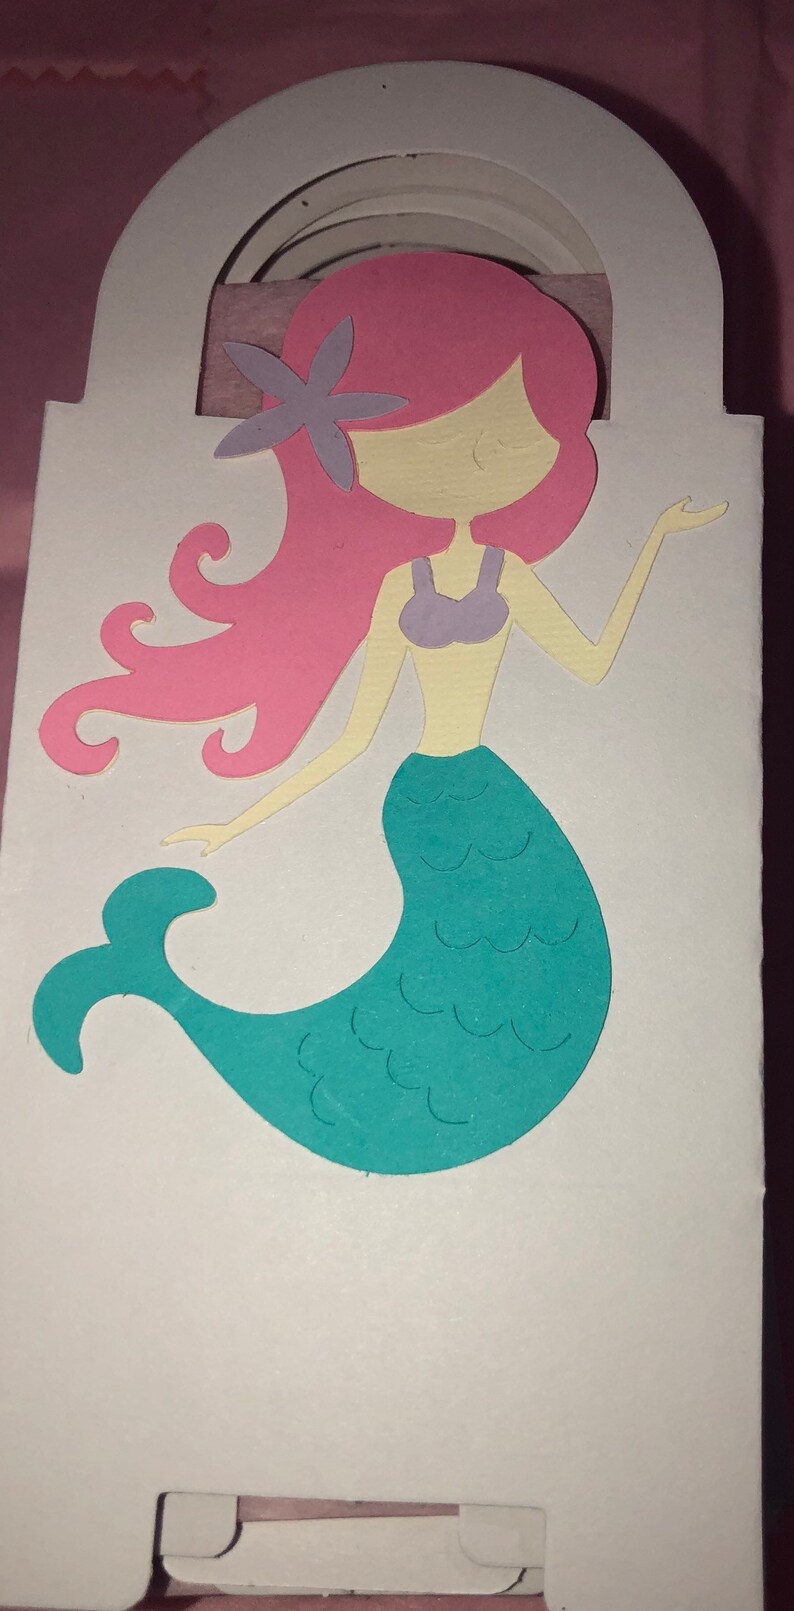 Mermaid Small Candy Bag image 2